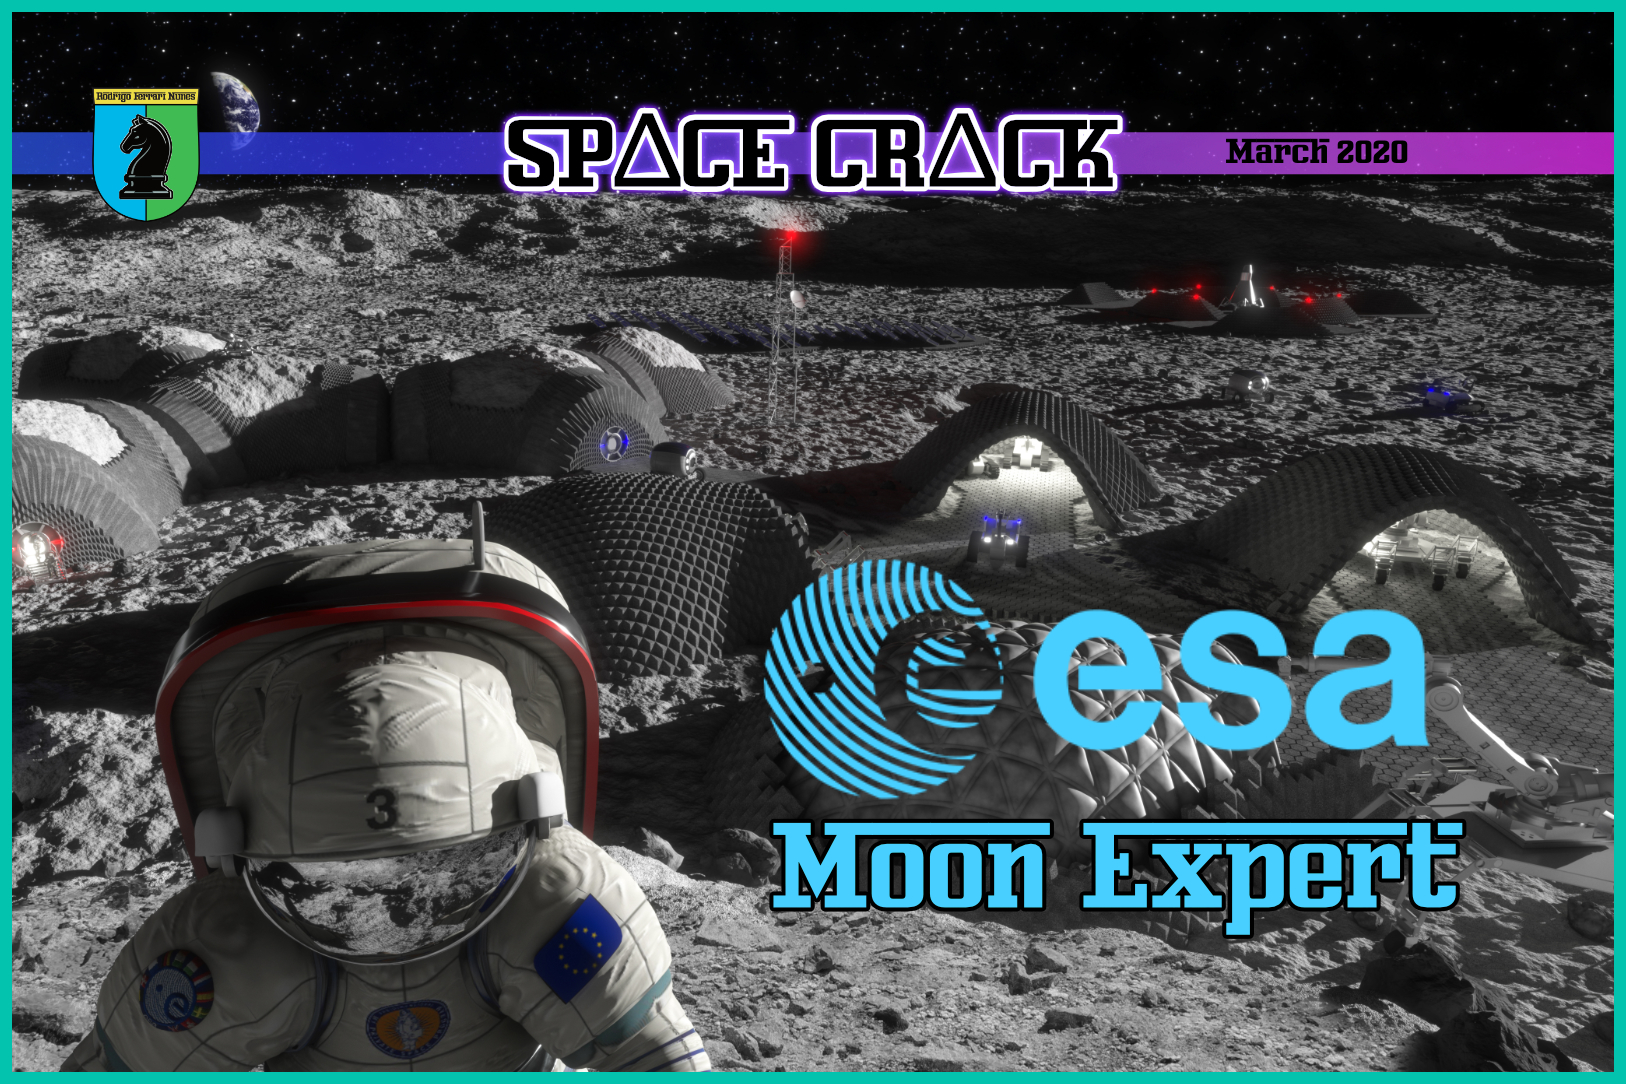 ESA’S MOON EXPERT